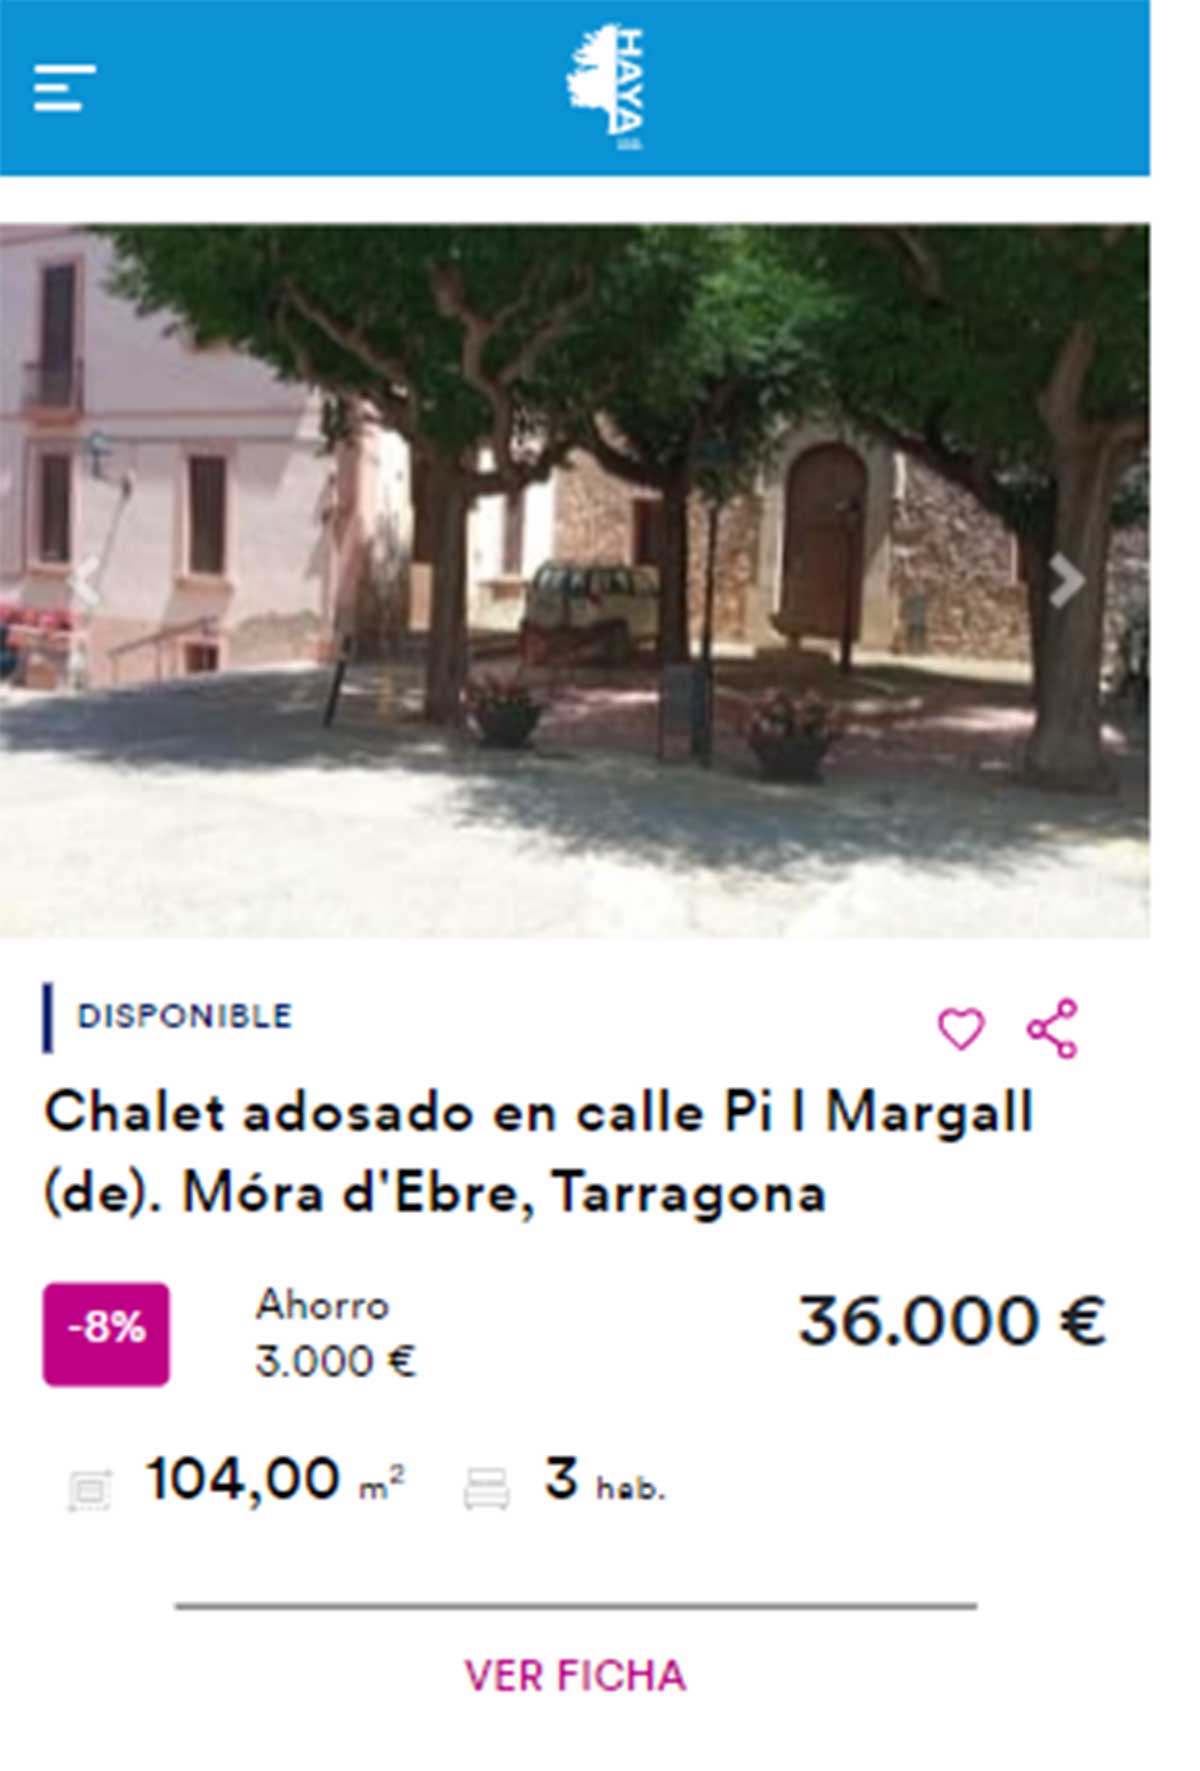 Chalet adosado por 36.000 euros